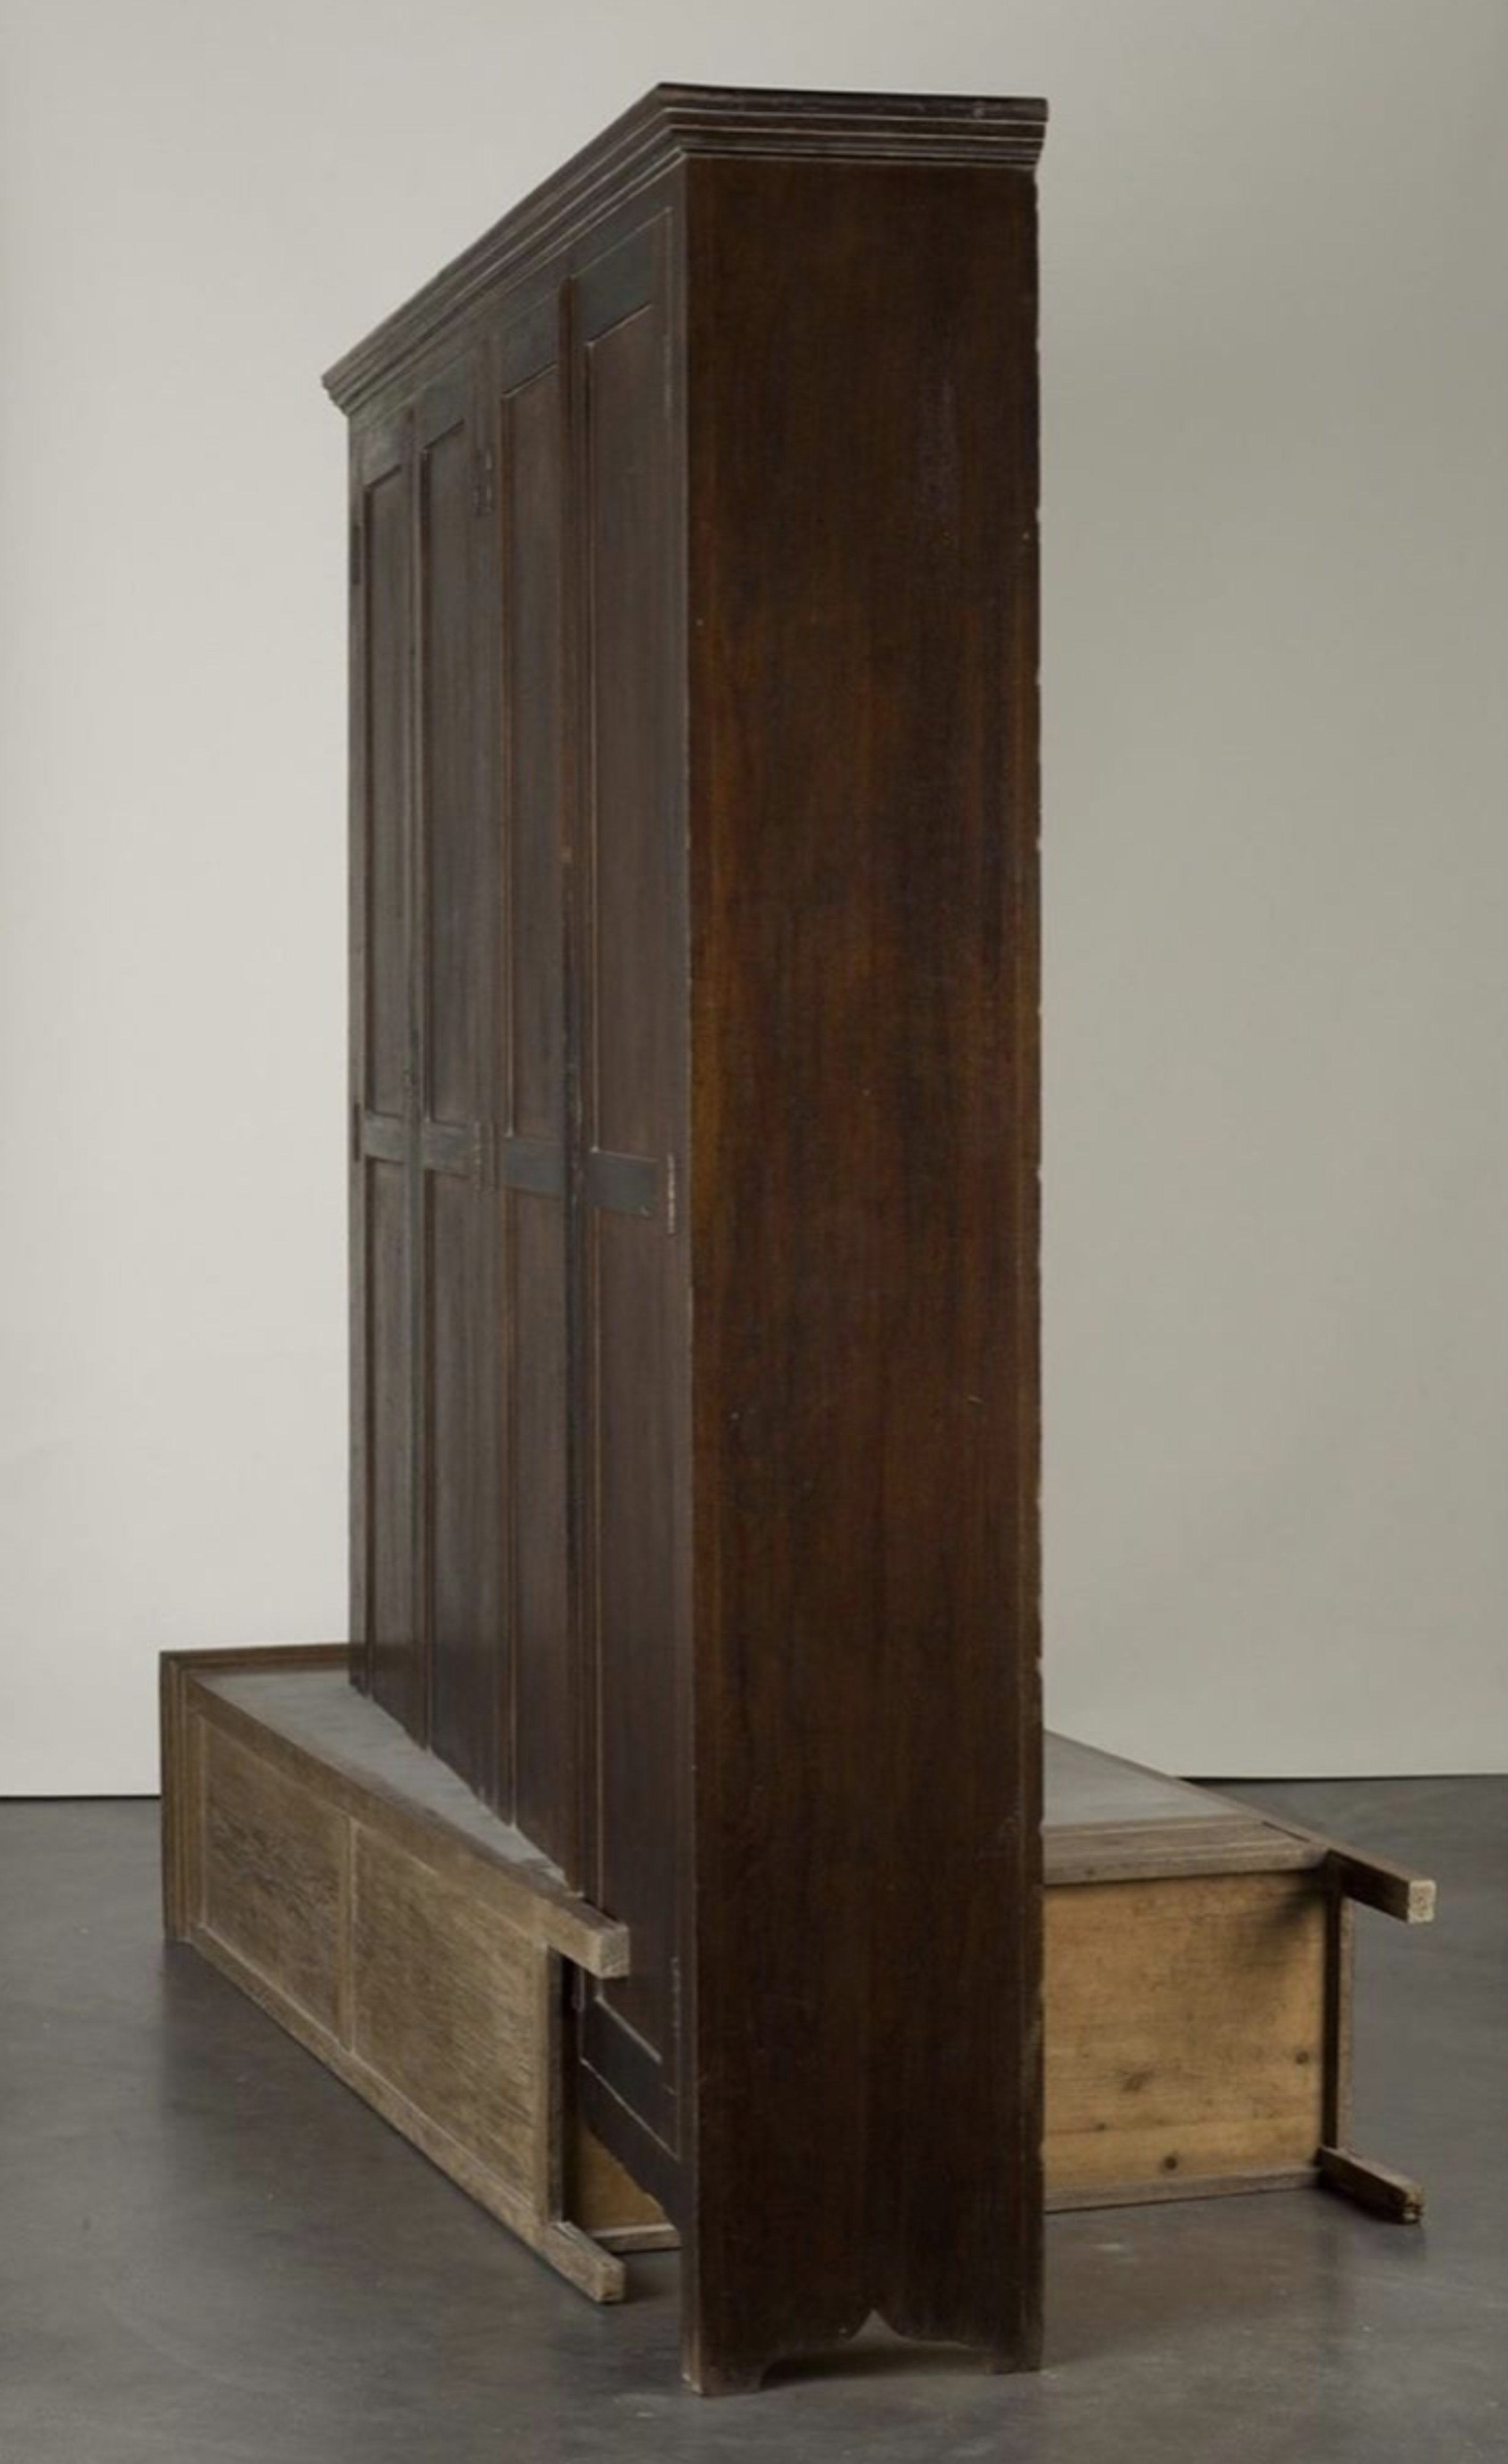 Doris Salcedo Untitled, 2008 (wooden armoire, wooden cabinet, concrete, and steel)